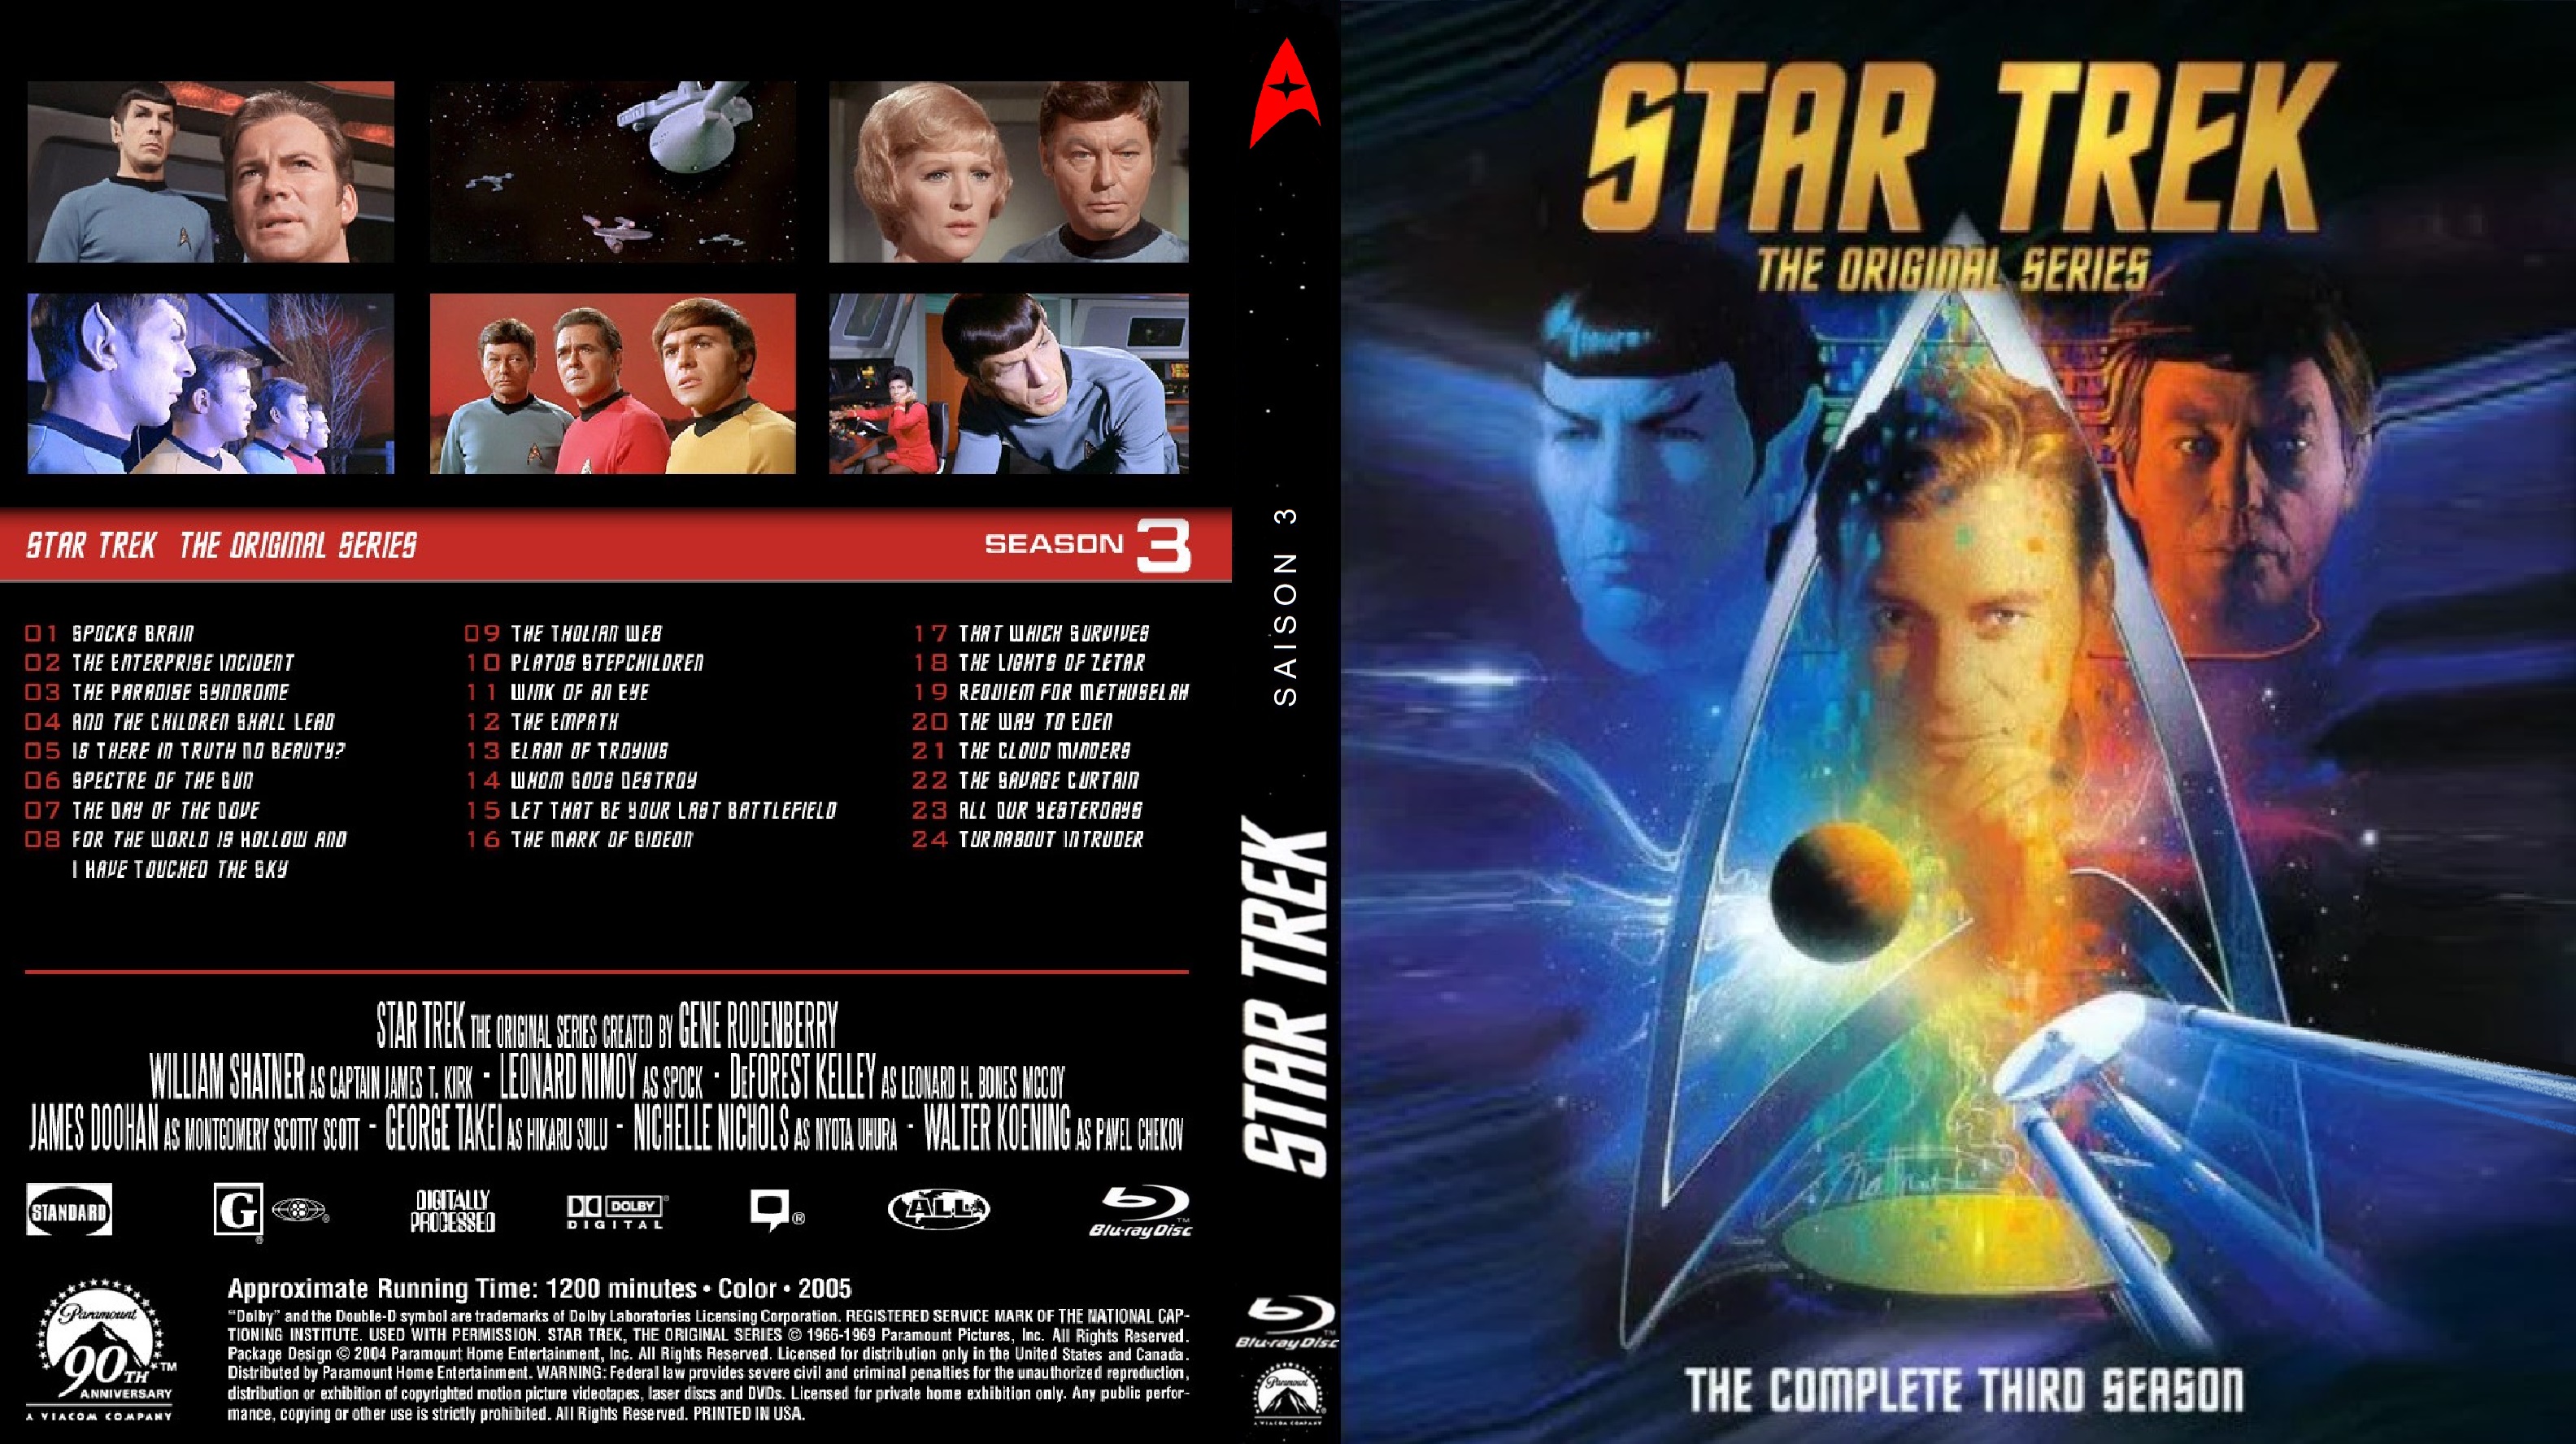 Jaquette DVD Star Trek saison 3 custom (BLU-RAY)